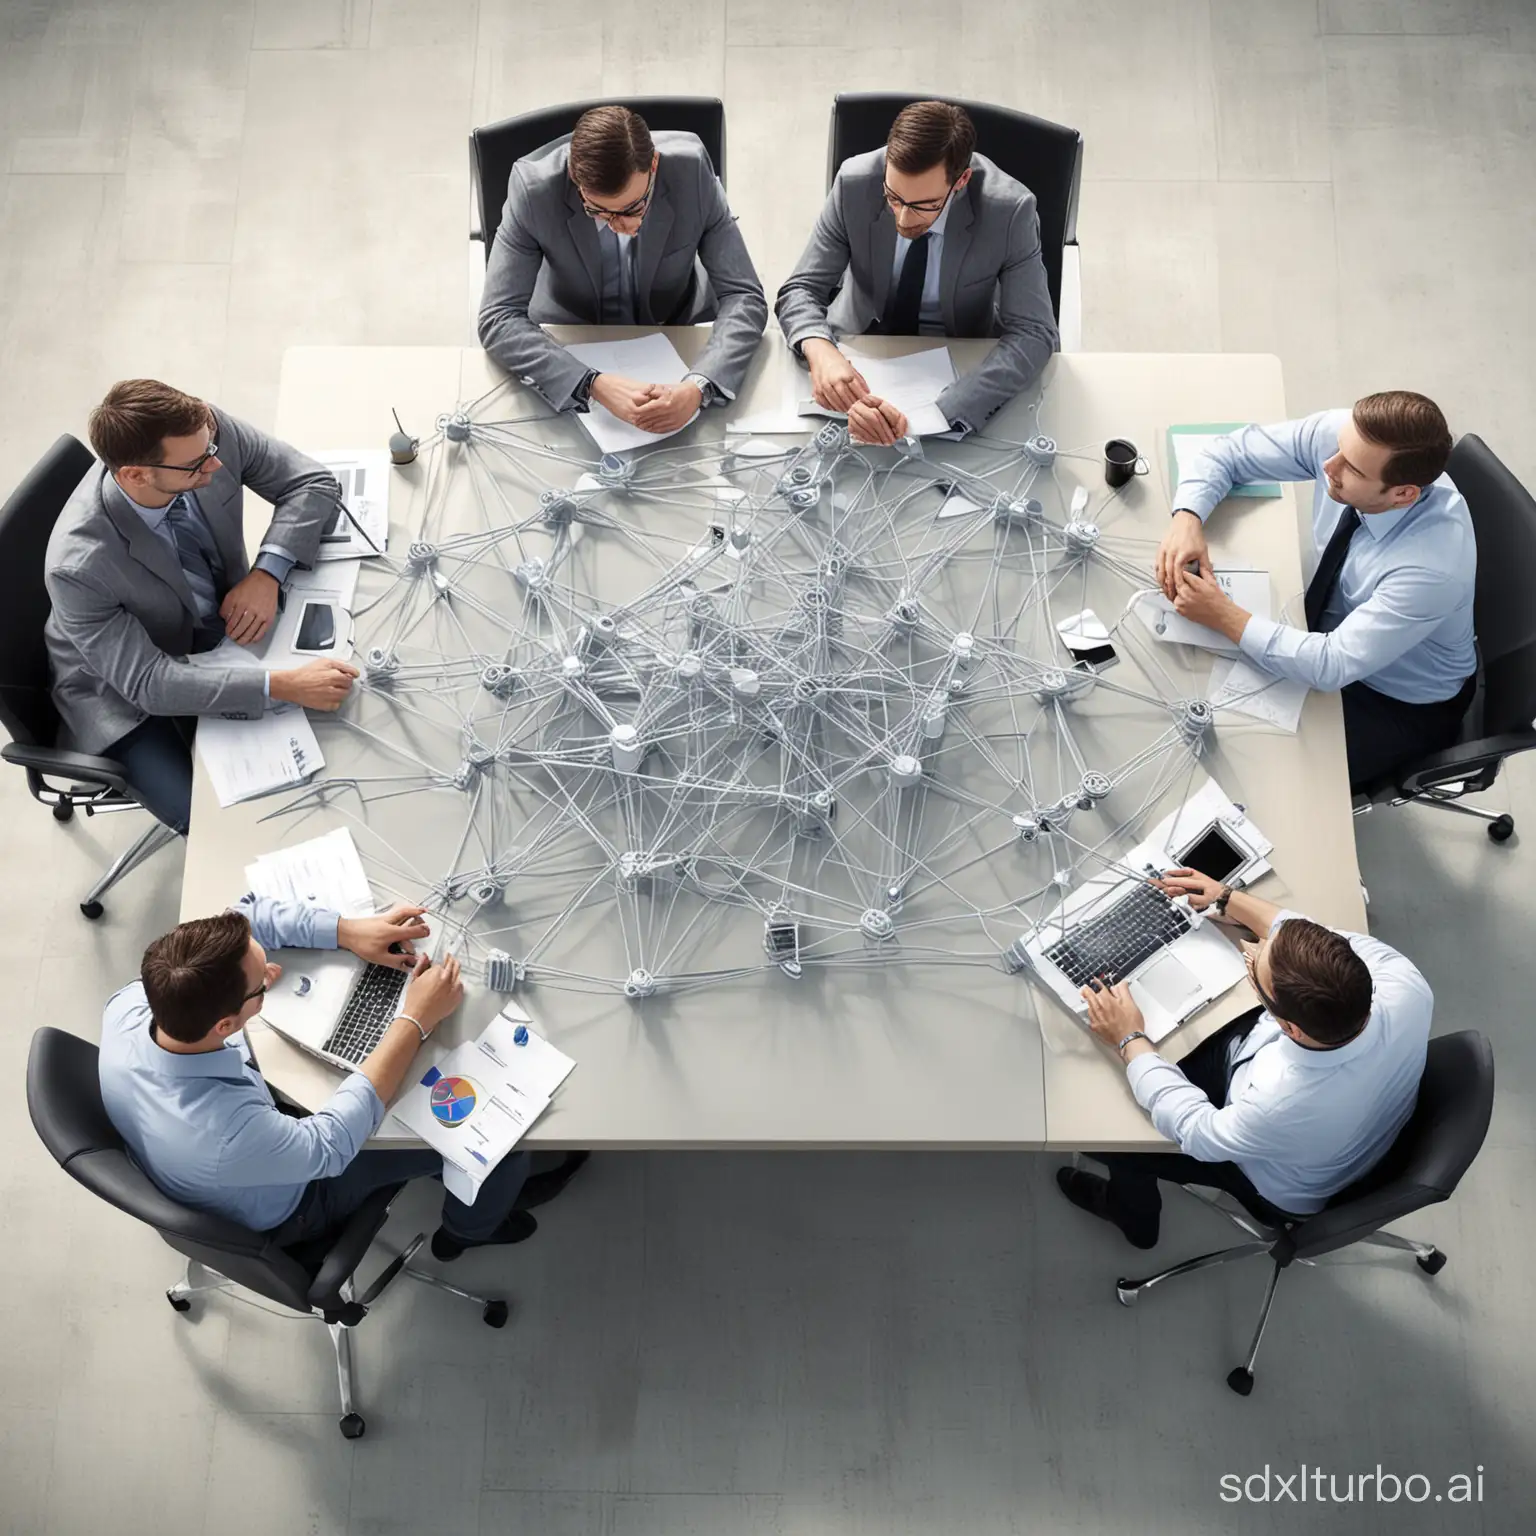 Corporate-IT-Department-Meeting-of-Six-People-Photorealistic-Scene